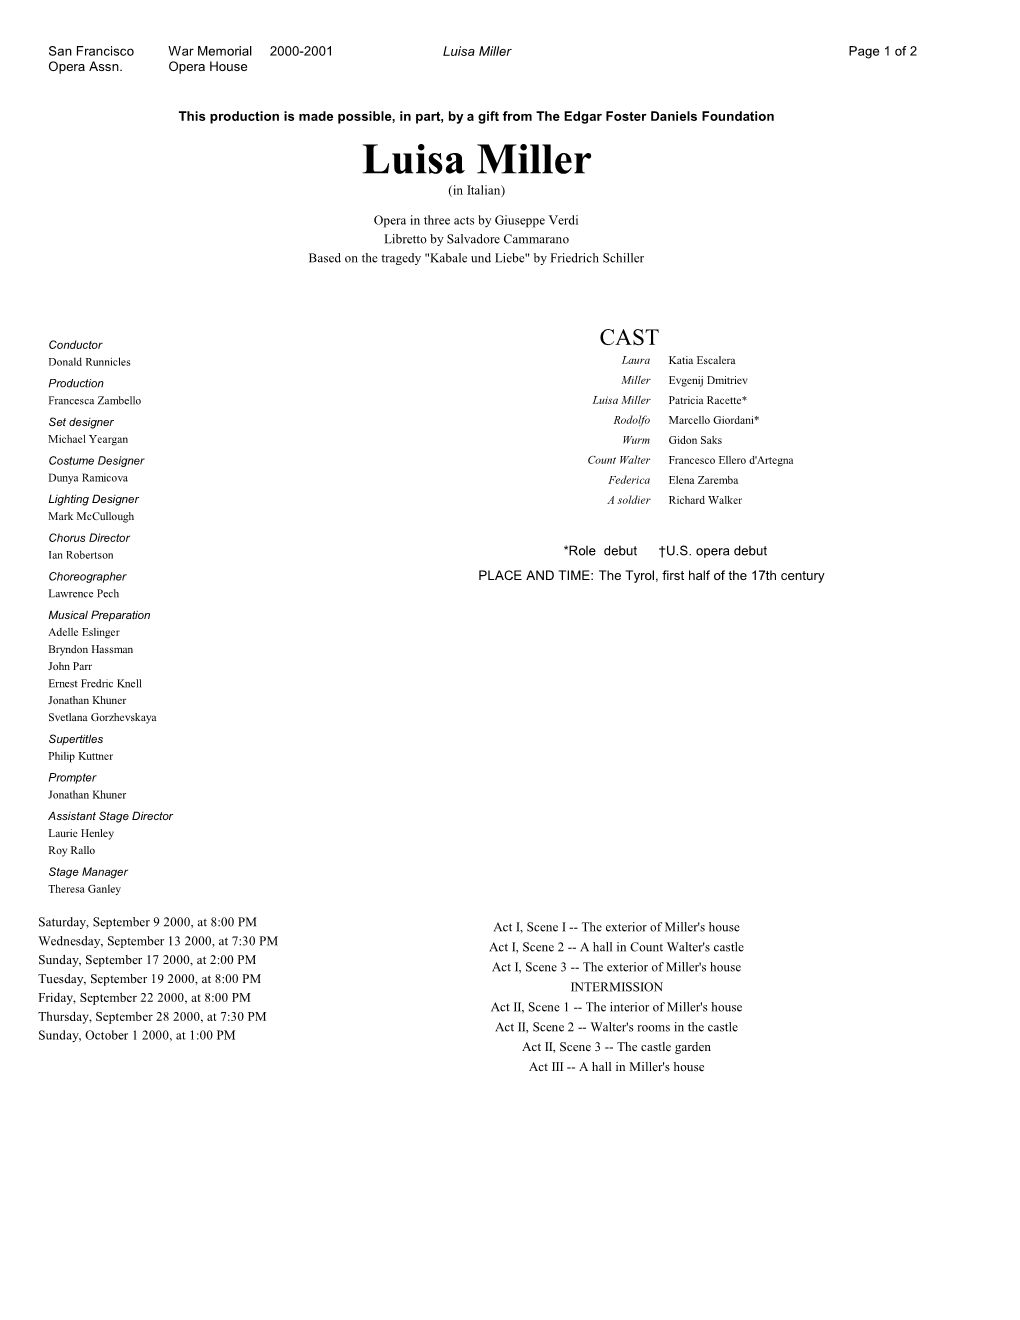 Luisa Miller Page 1 of 2 Opera Assn